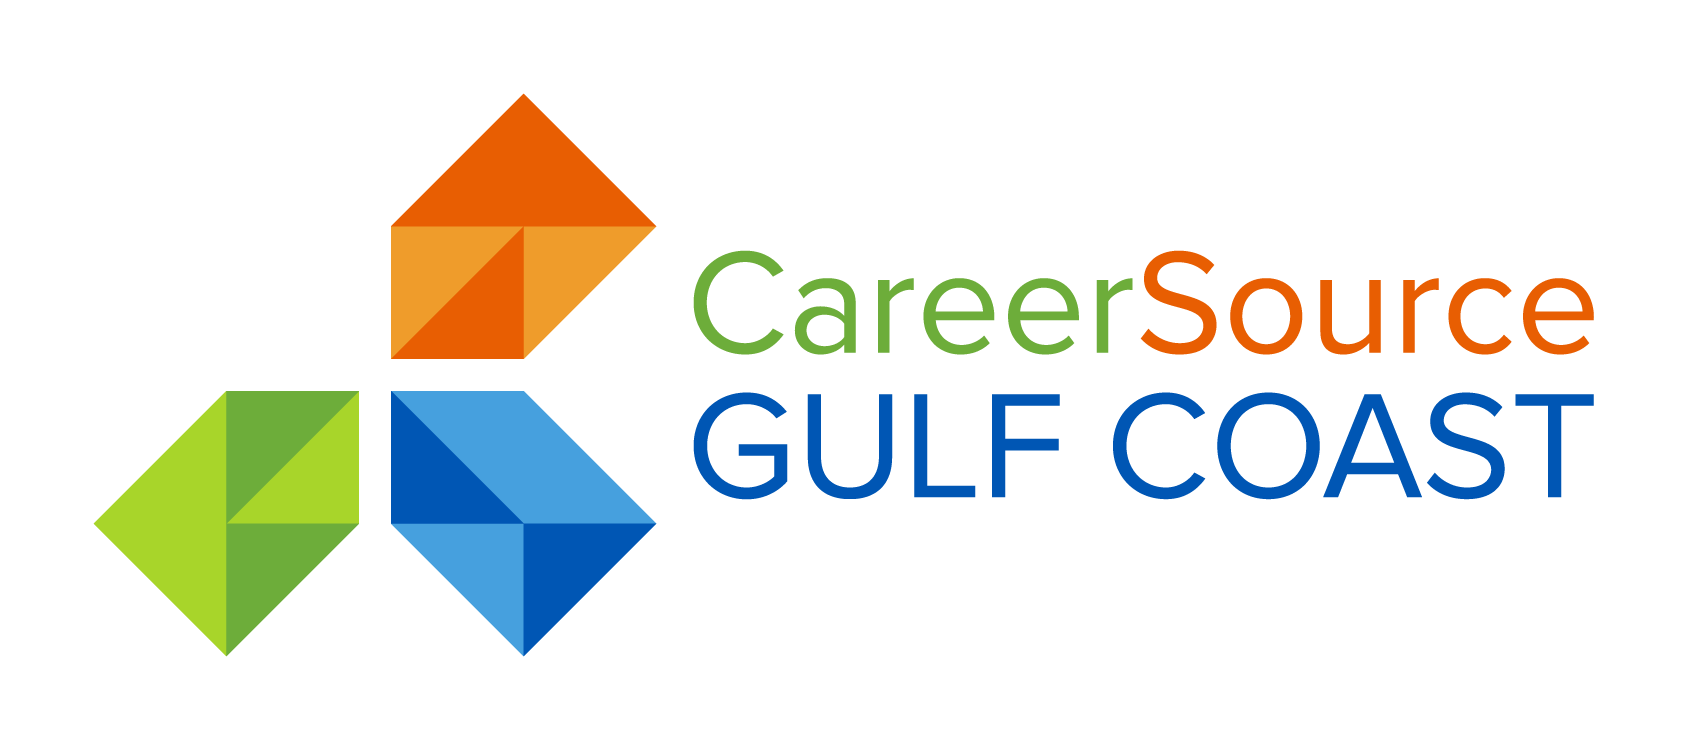 CareerSource Gulf Coast logo